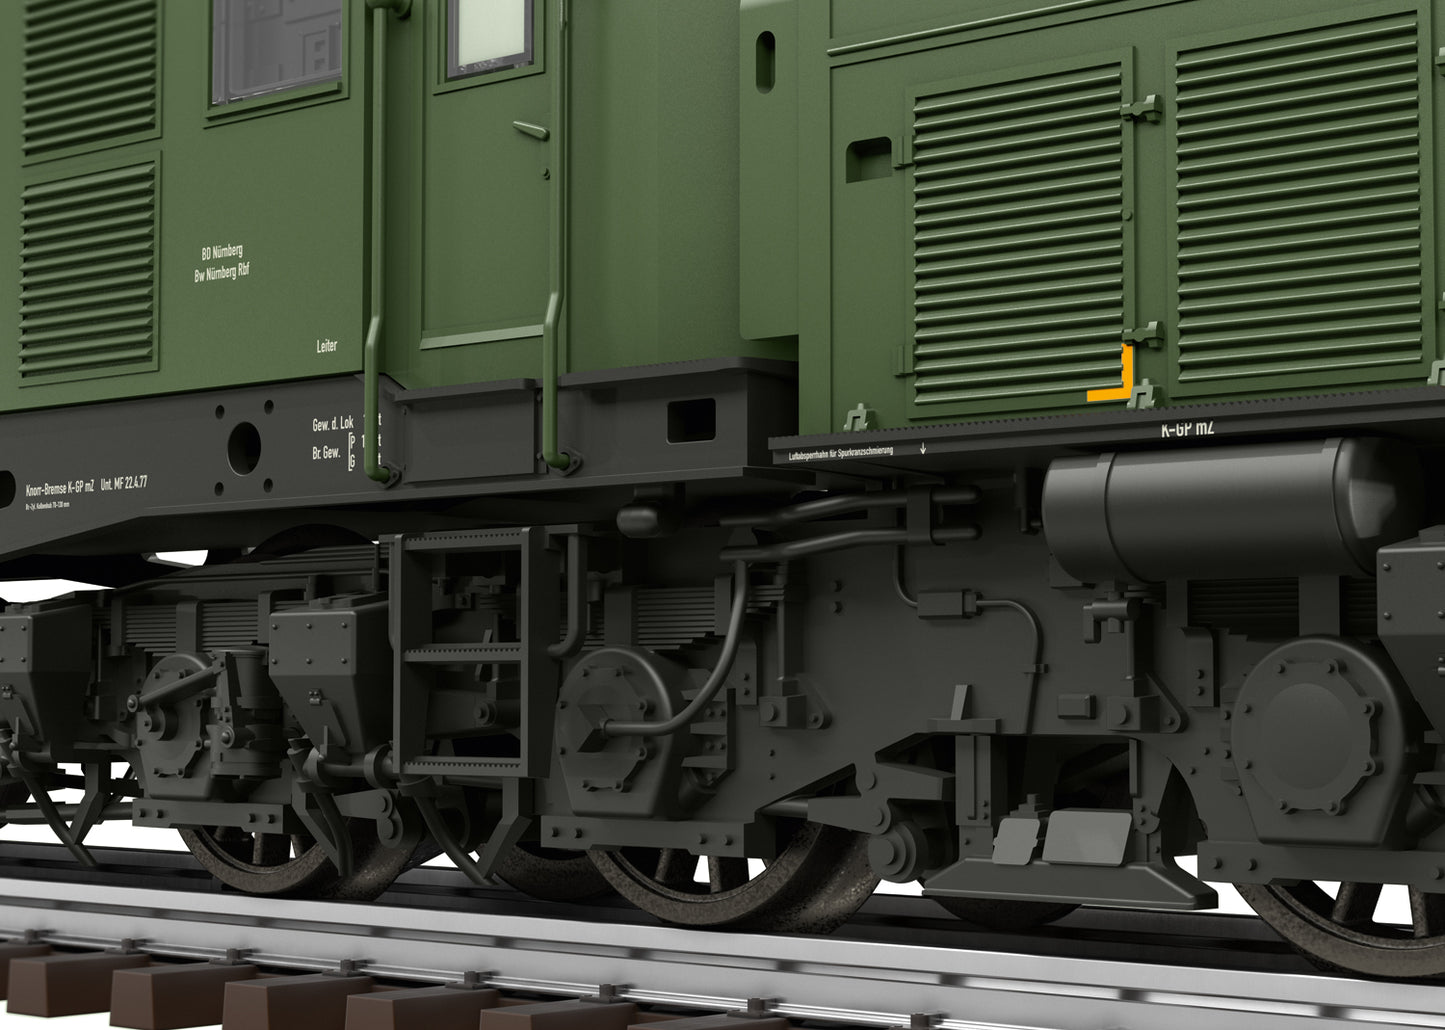 Trix HO 25990 Electric Locomotive, BR 194, DB, Ep. IV 2021 New Item